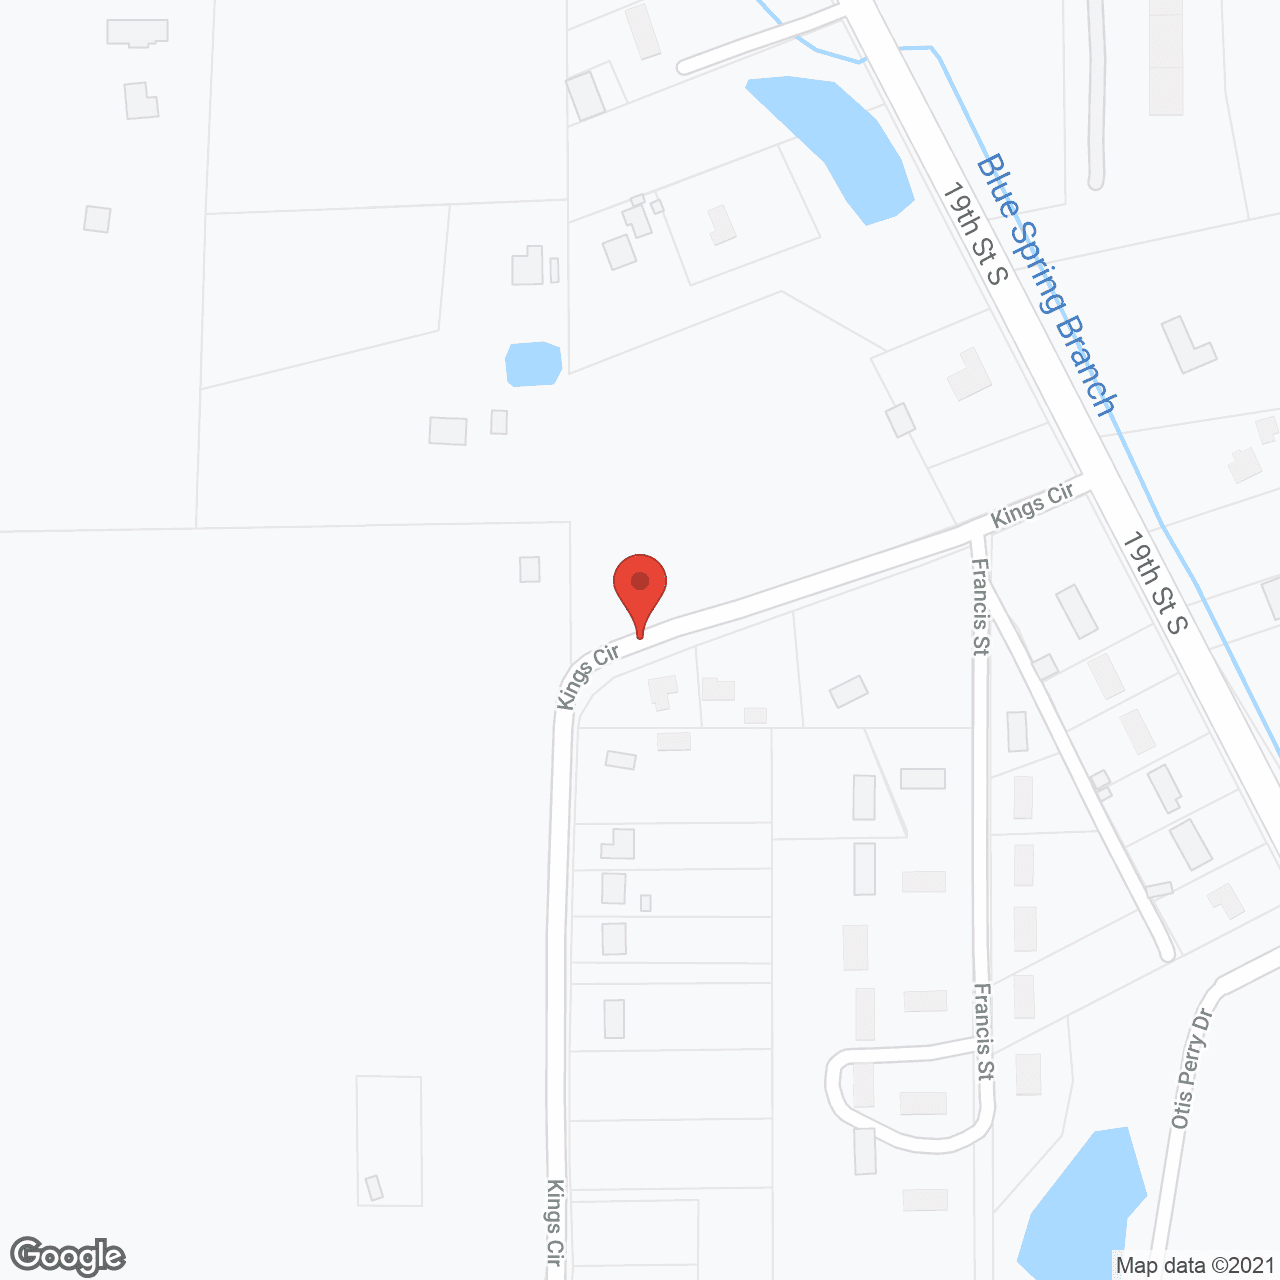 Village East in google map